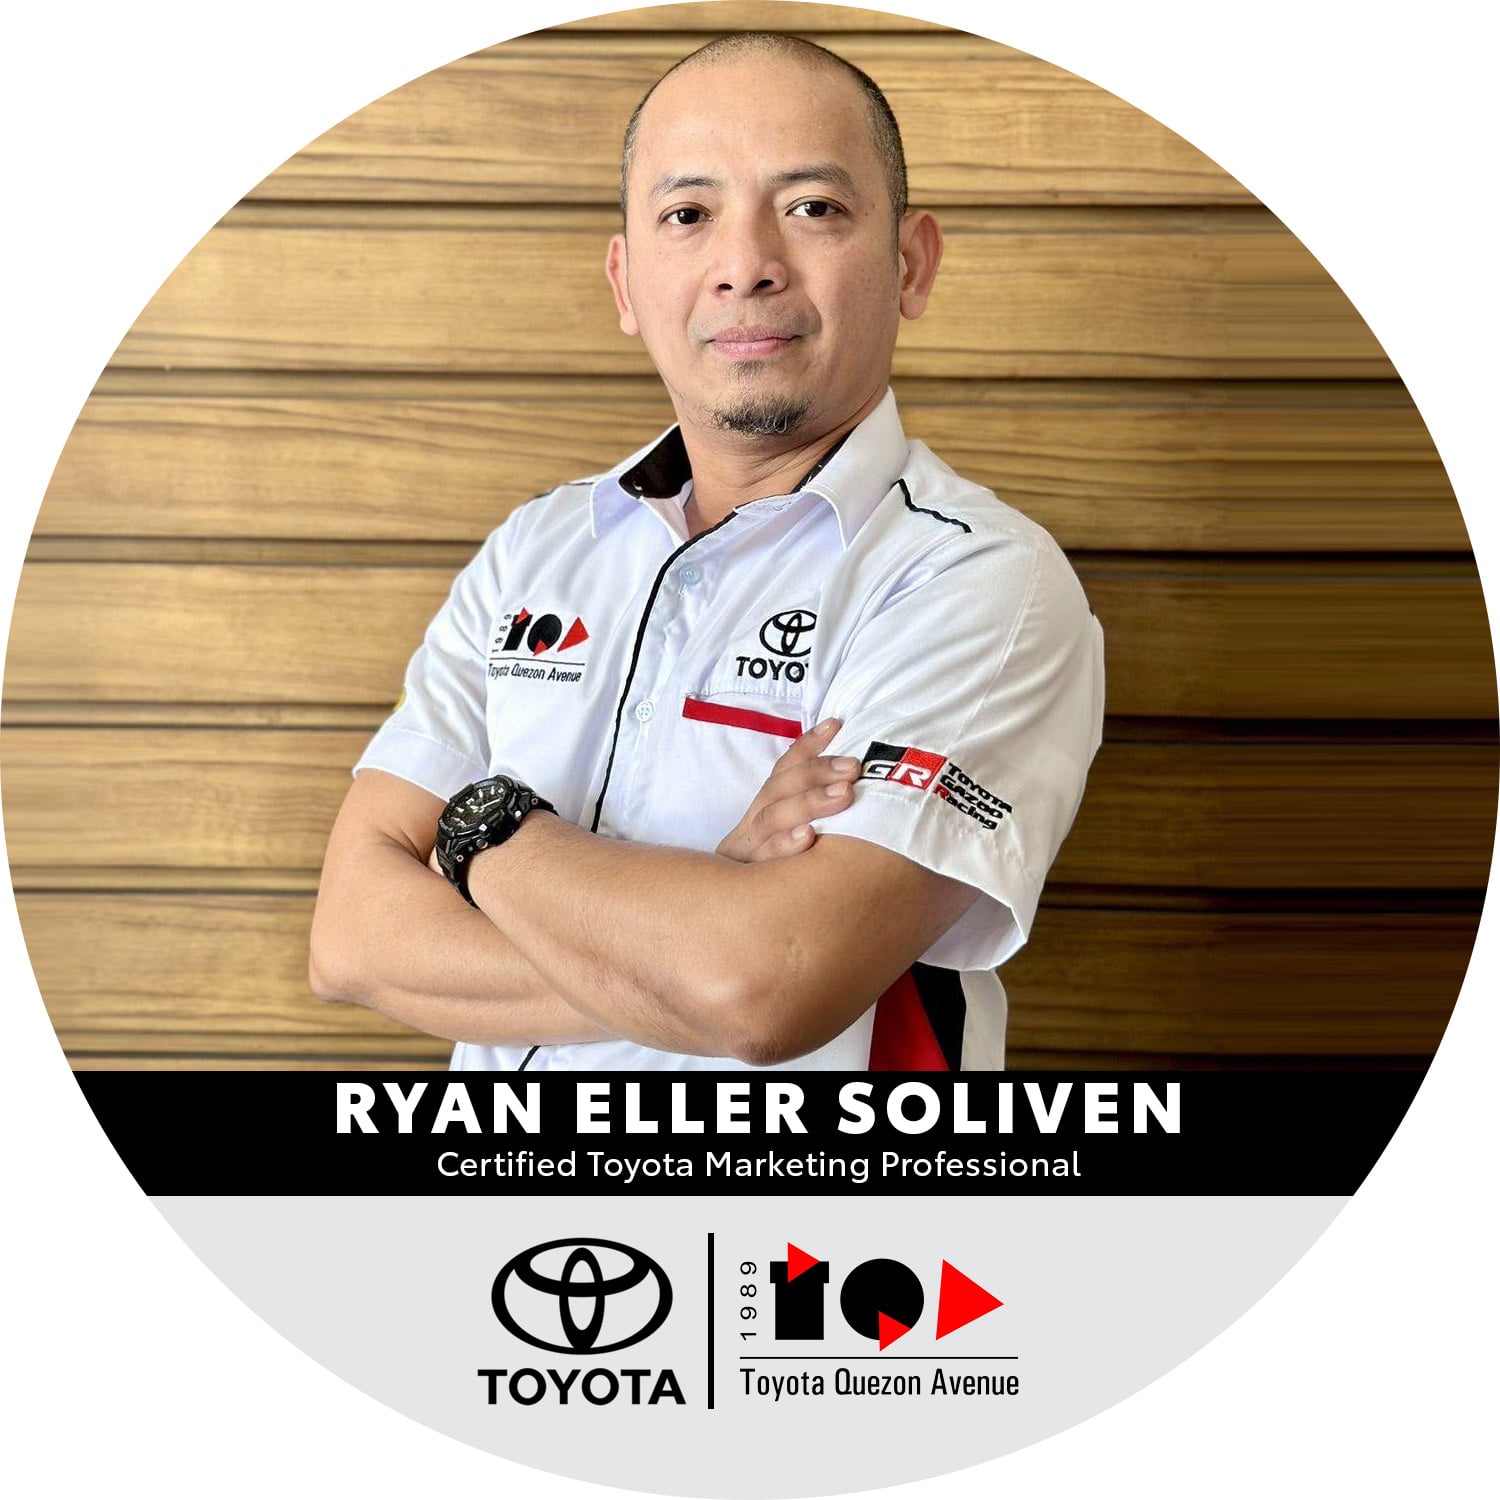 Certified Toyota Marketing Professionals - Ryan Eller Soliven